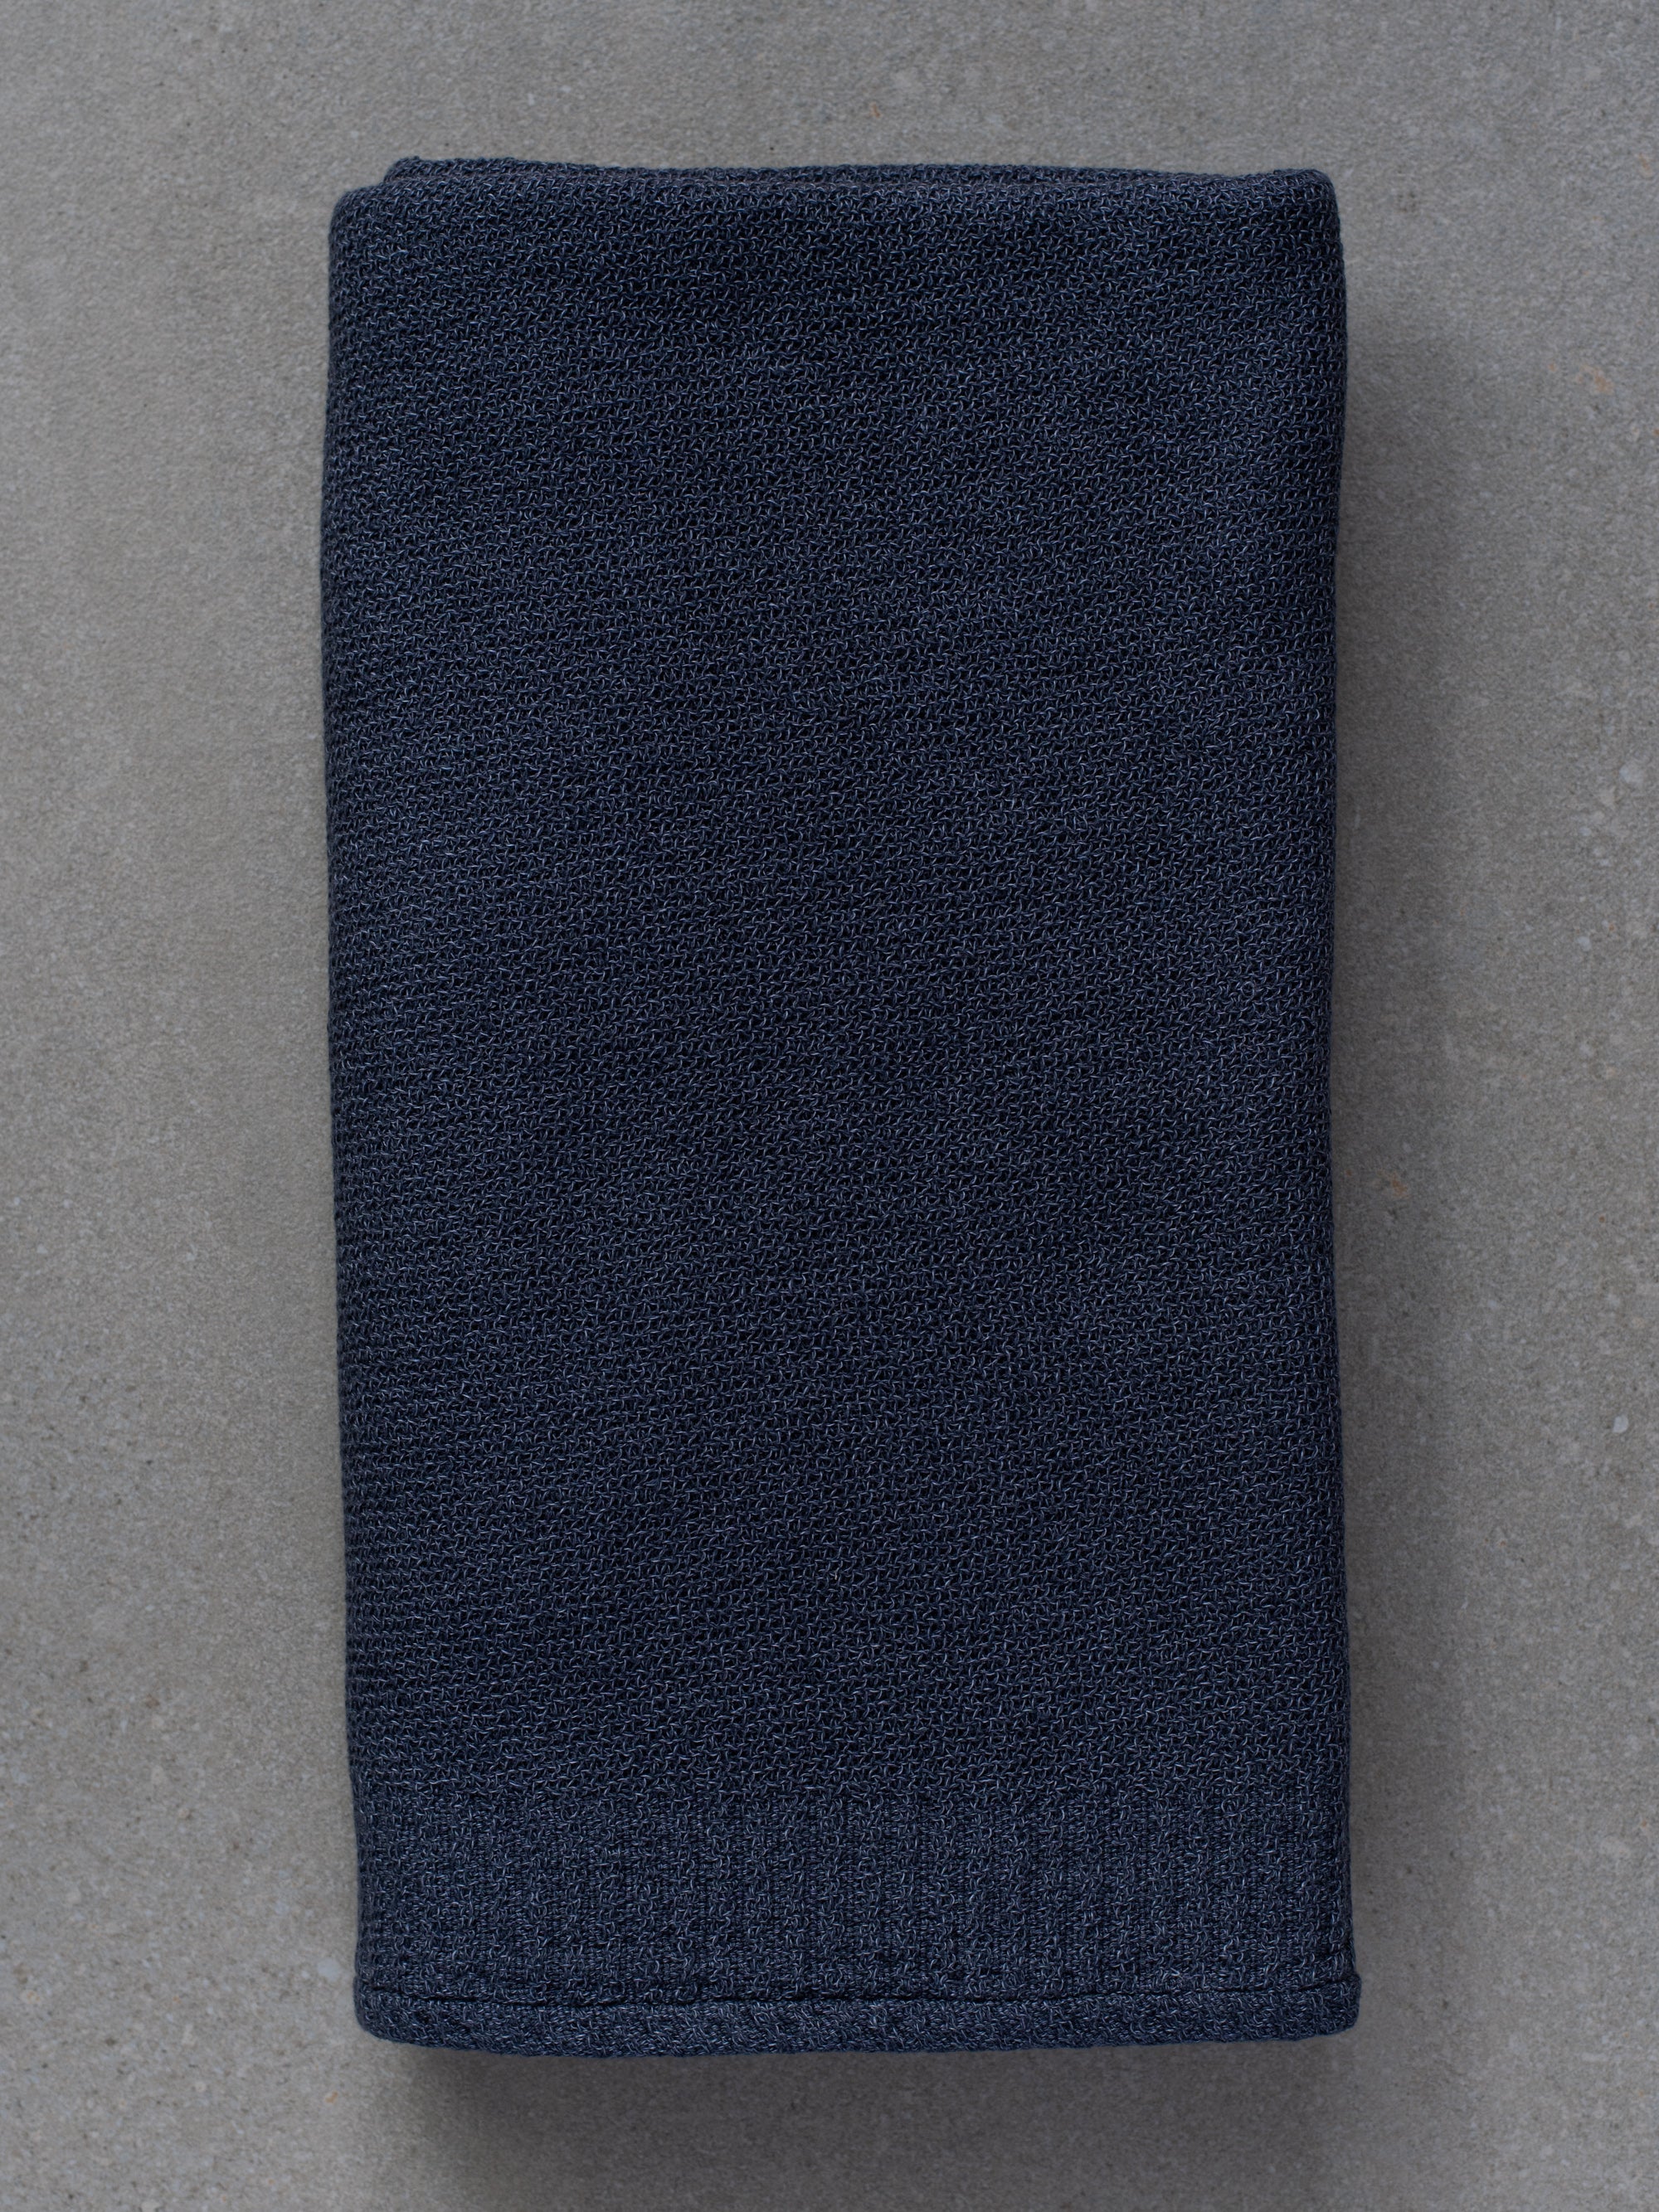 Lana Towels - Japanese Cotton Towels from Kontex Imabari Japan